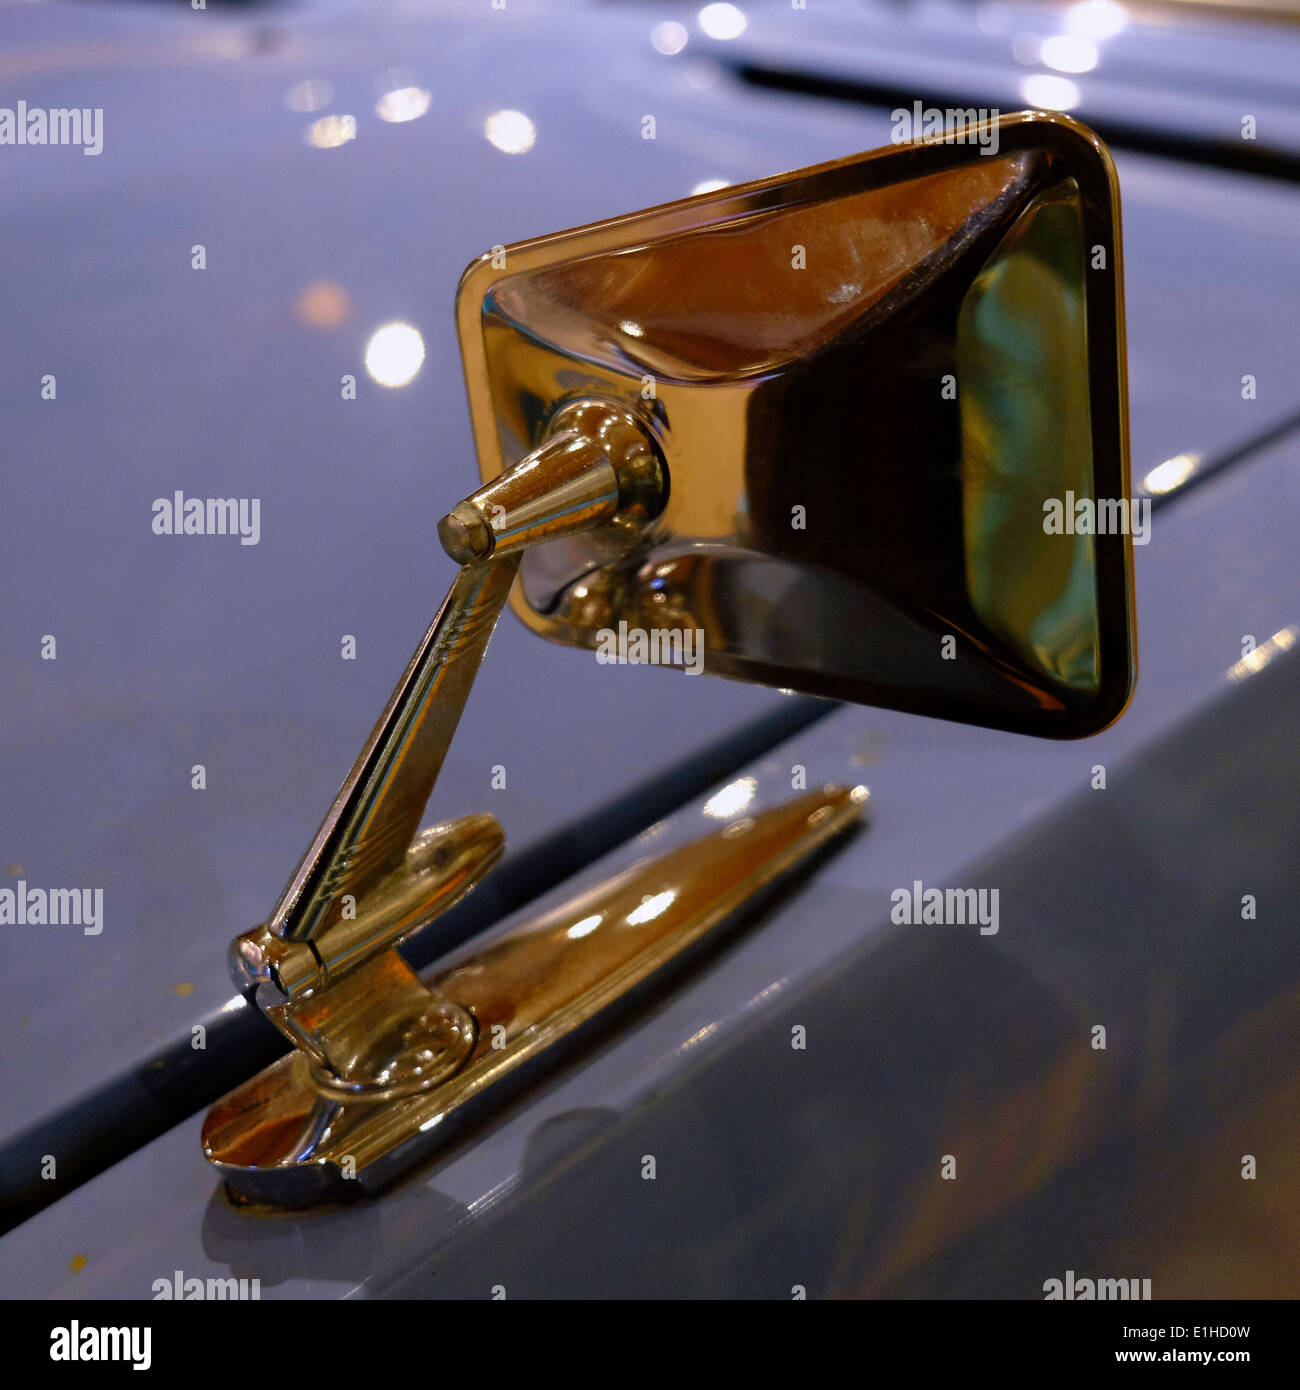 Chrome wing mirror on blue vauxhall classic car Stock Photo